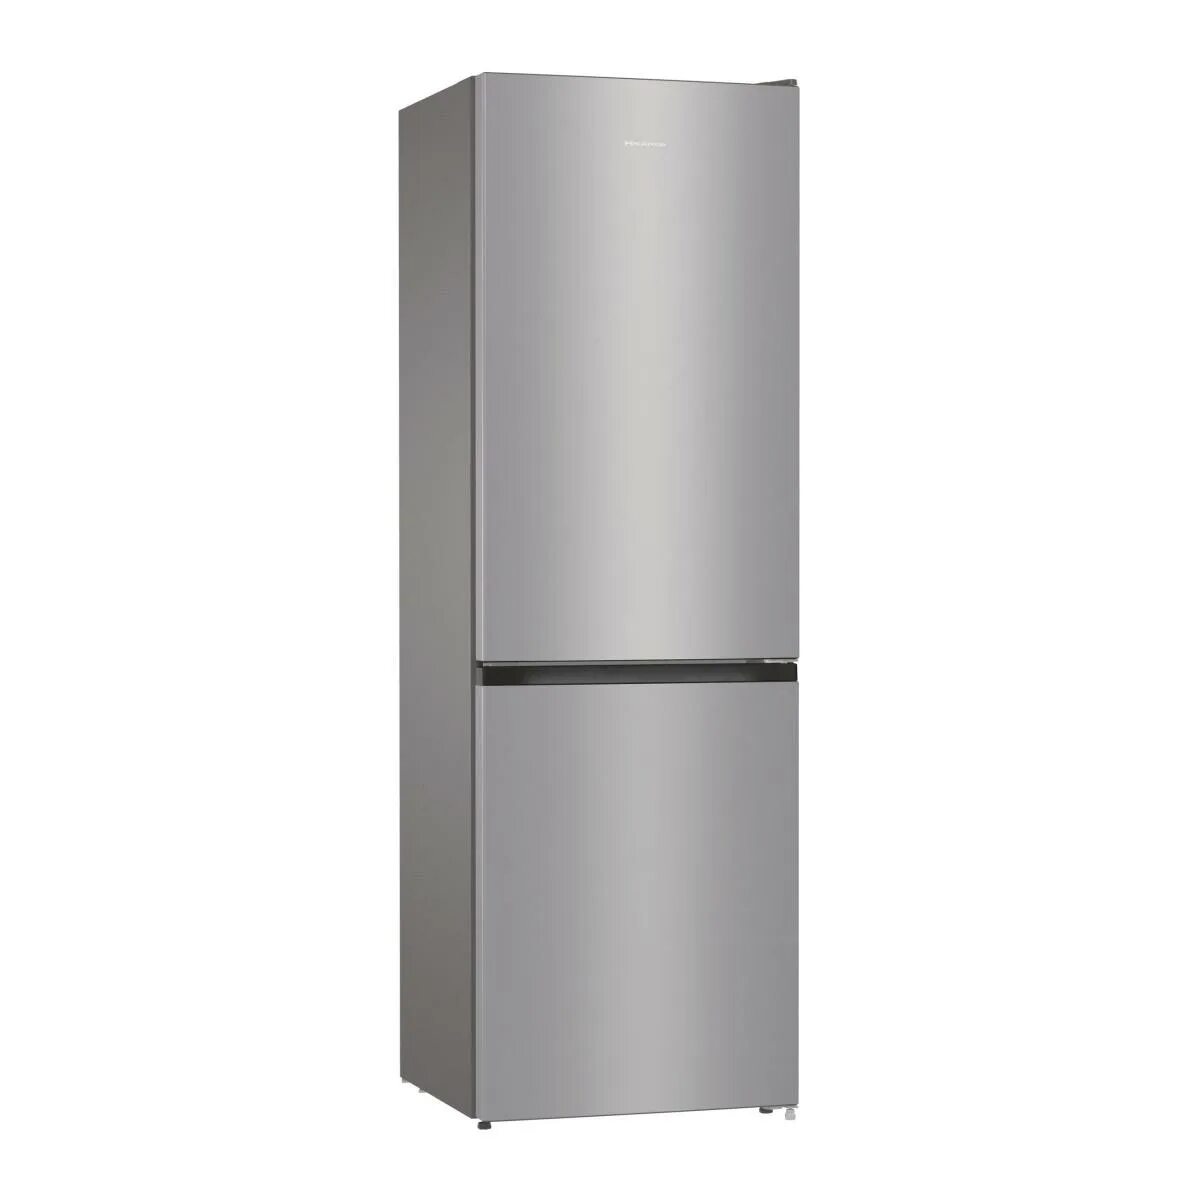 Холодильник Haier c3f532cmsg. Холодильник Haier c2f537cmsg. Холодильник Gorenje nrk6202axl4. Gorenje NRK 6191 es4. Горенье 200